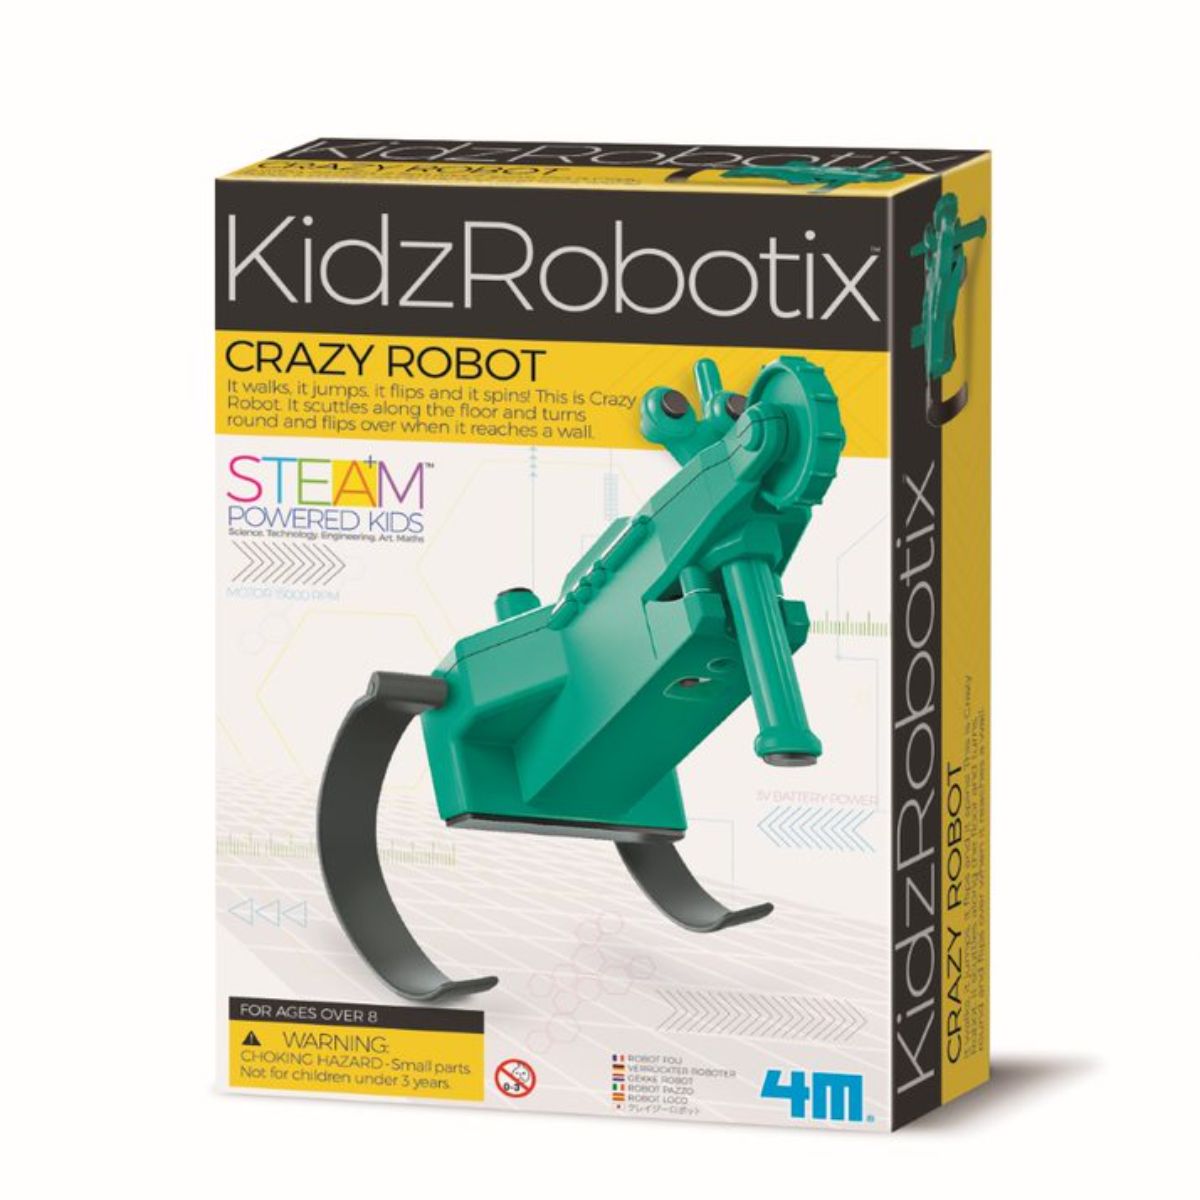 Kit constructie robot, 4M, Crazy Robot Kidz Robotix 4M